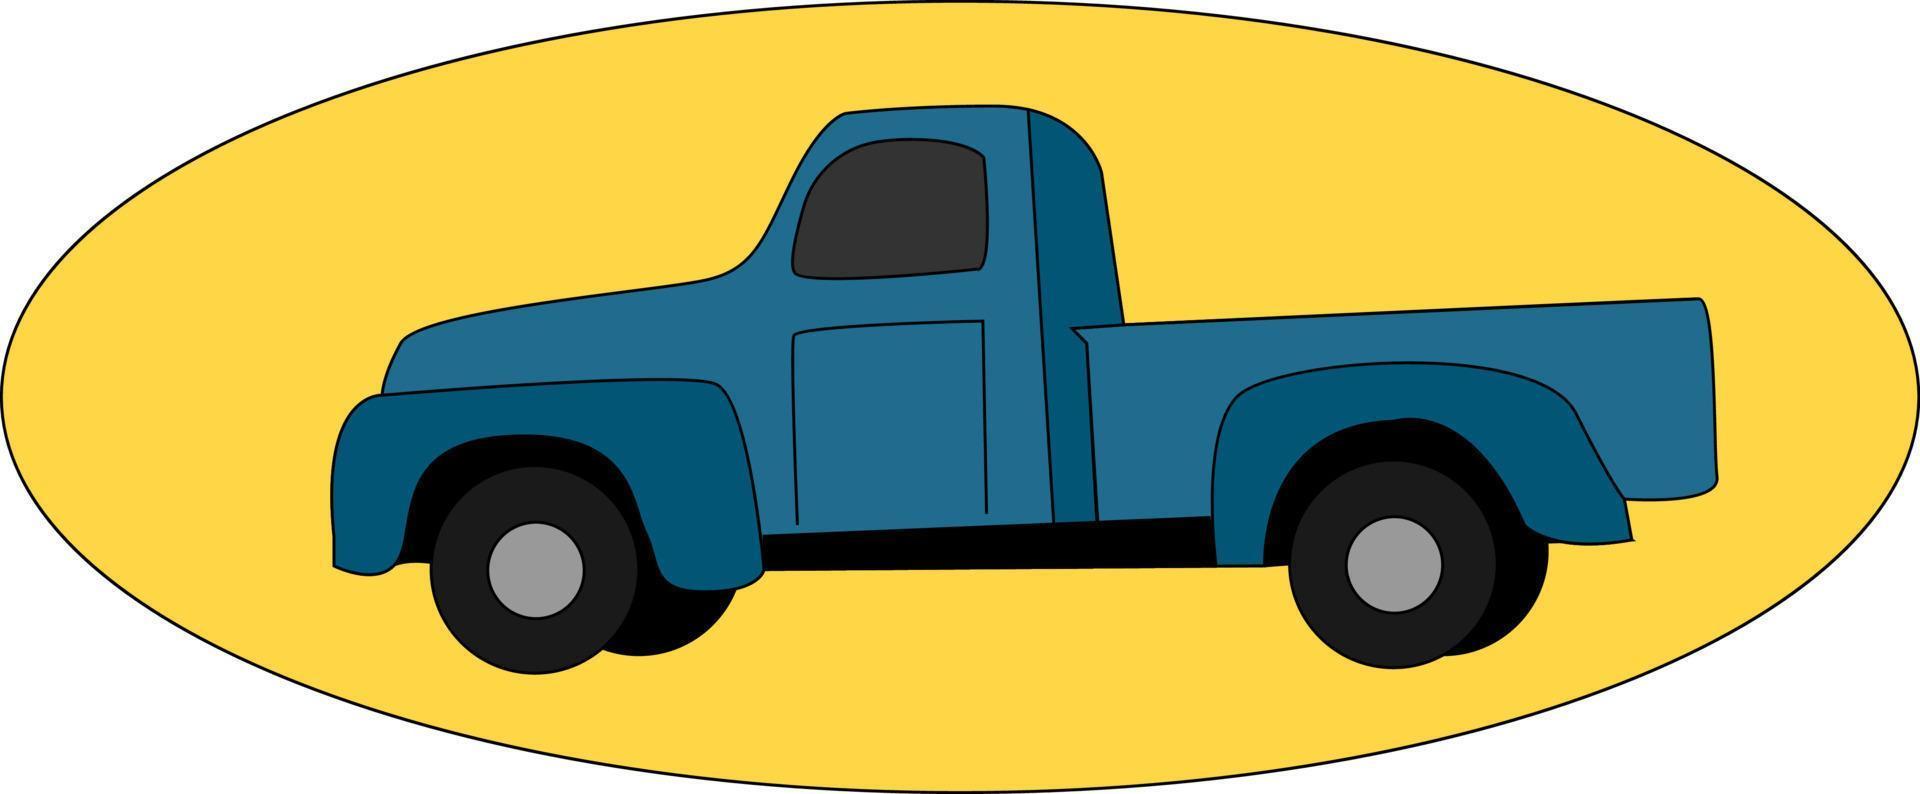 Blue pickup, illustration, vector on white background.